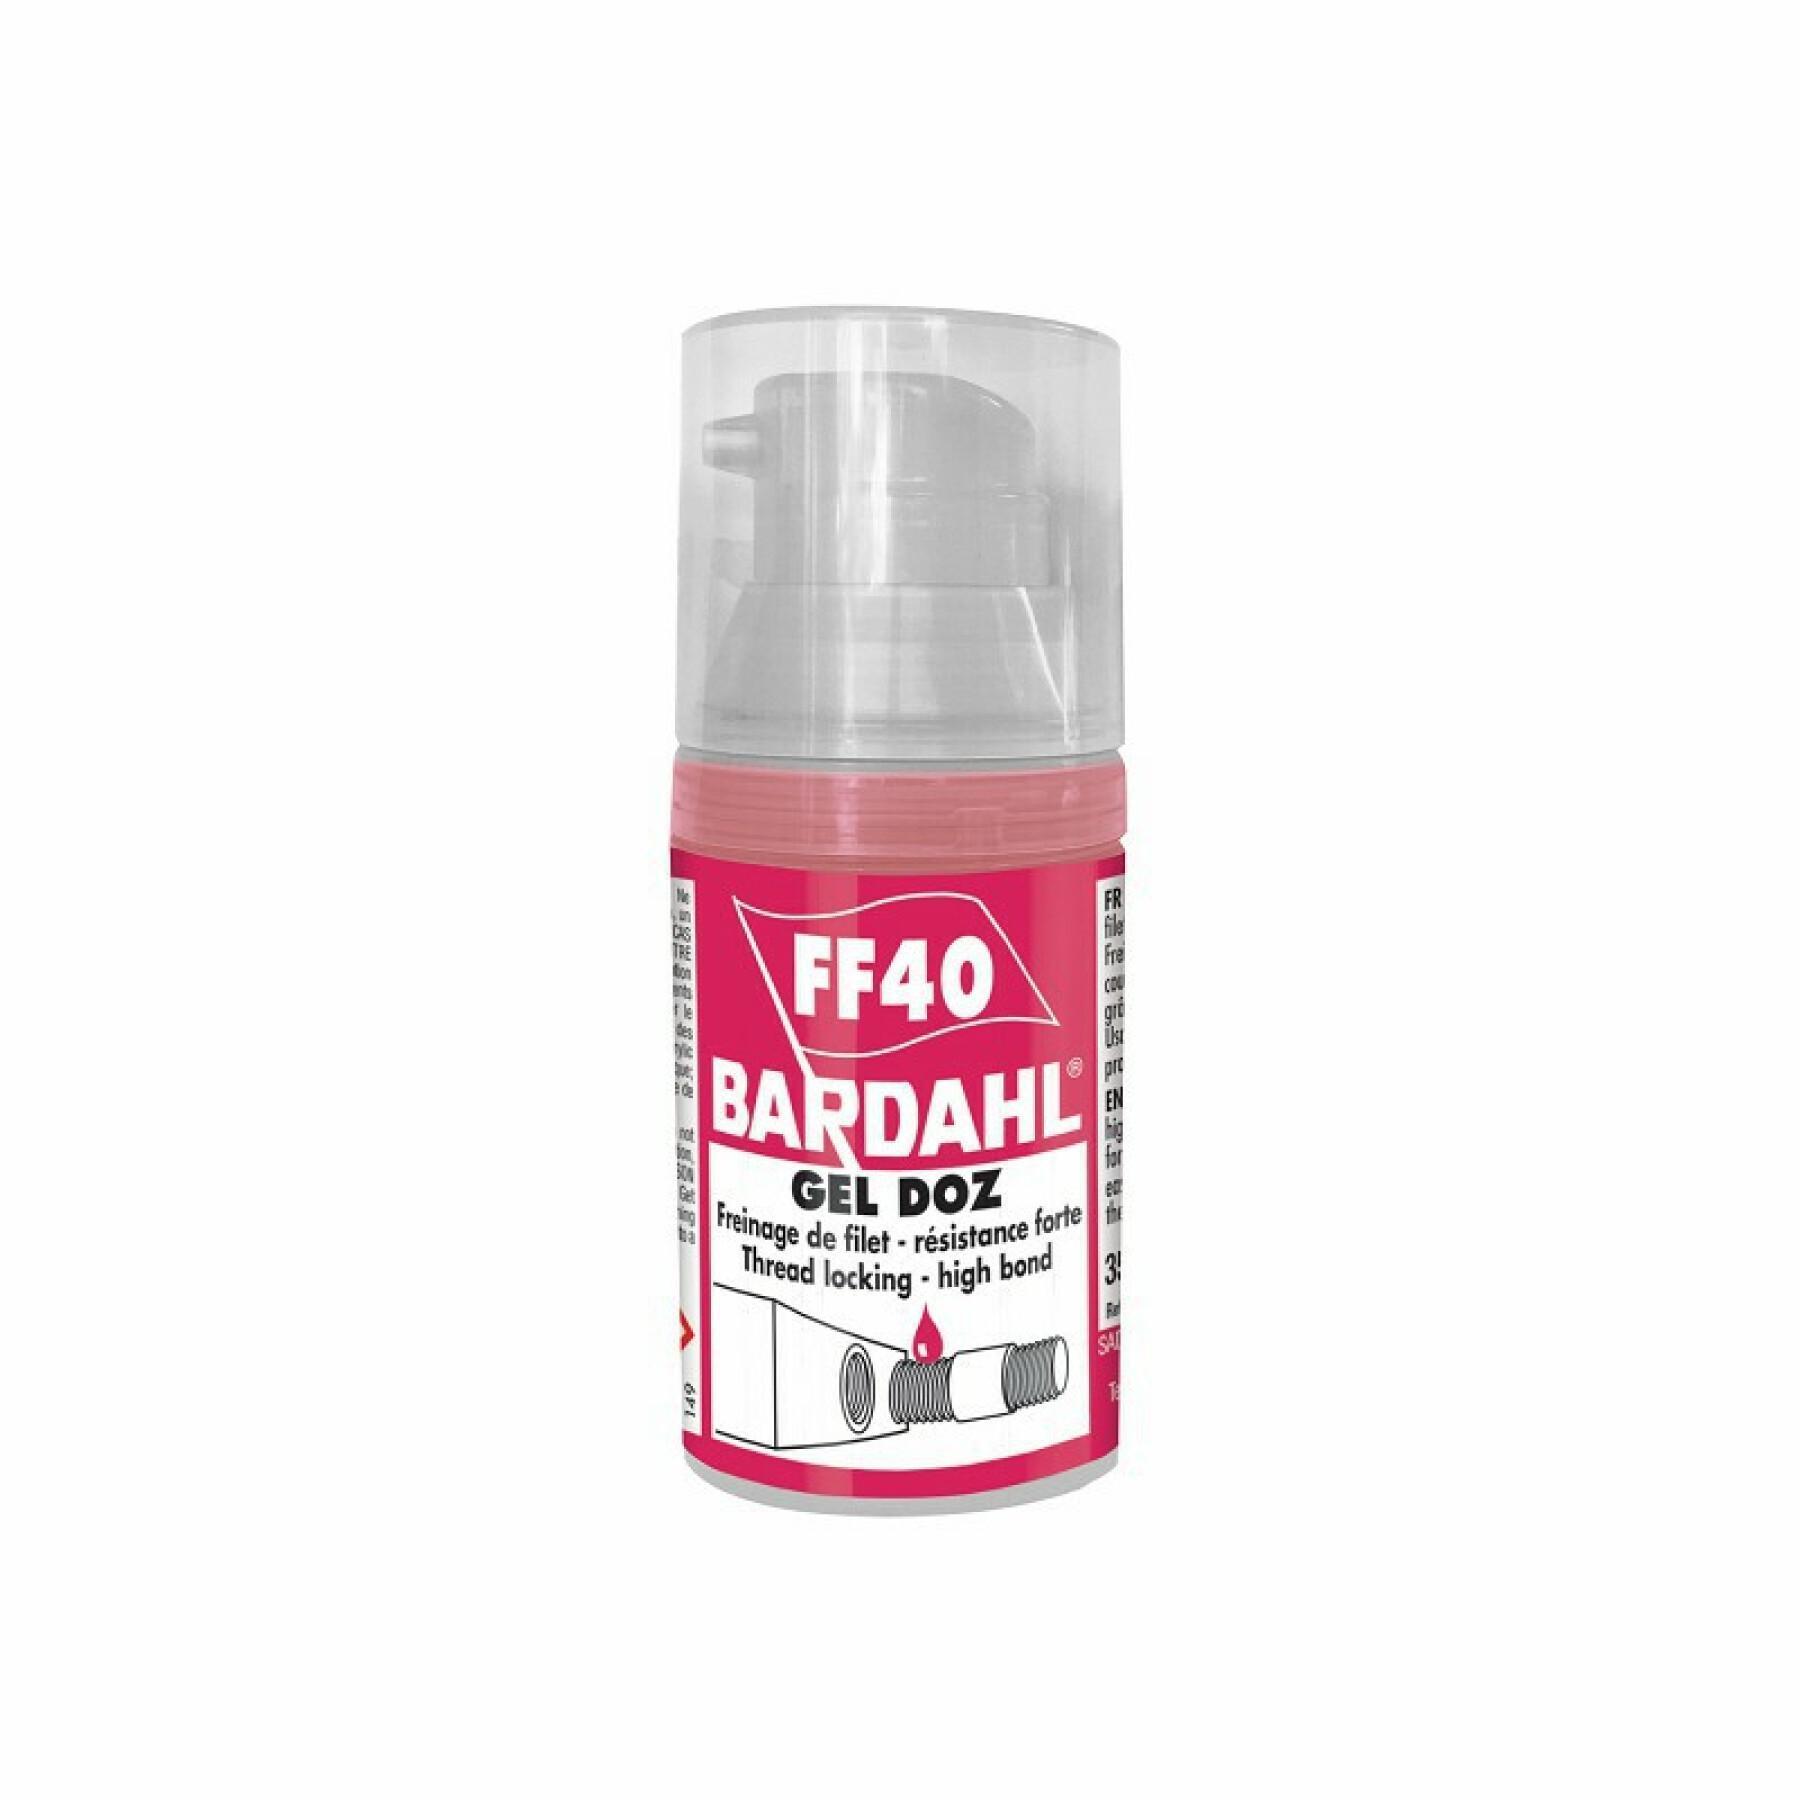 Adhesive brake net pump resistant Bardahl Geldoz Ff40 35 g